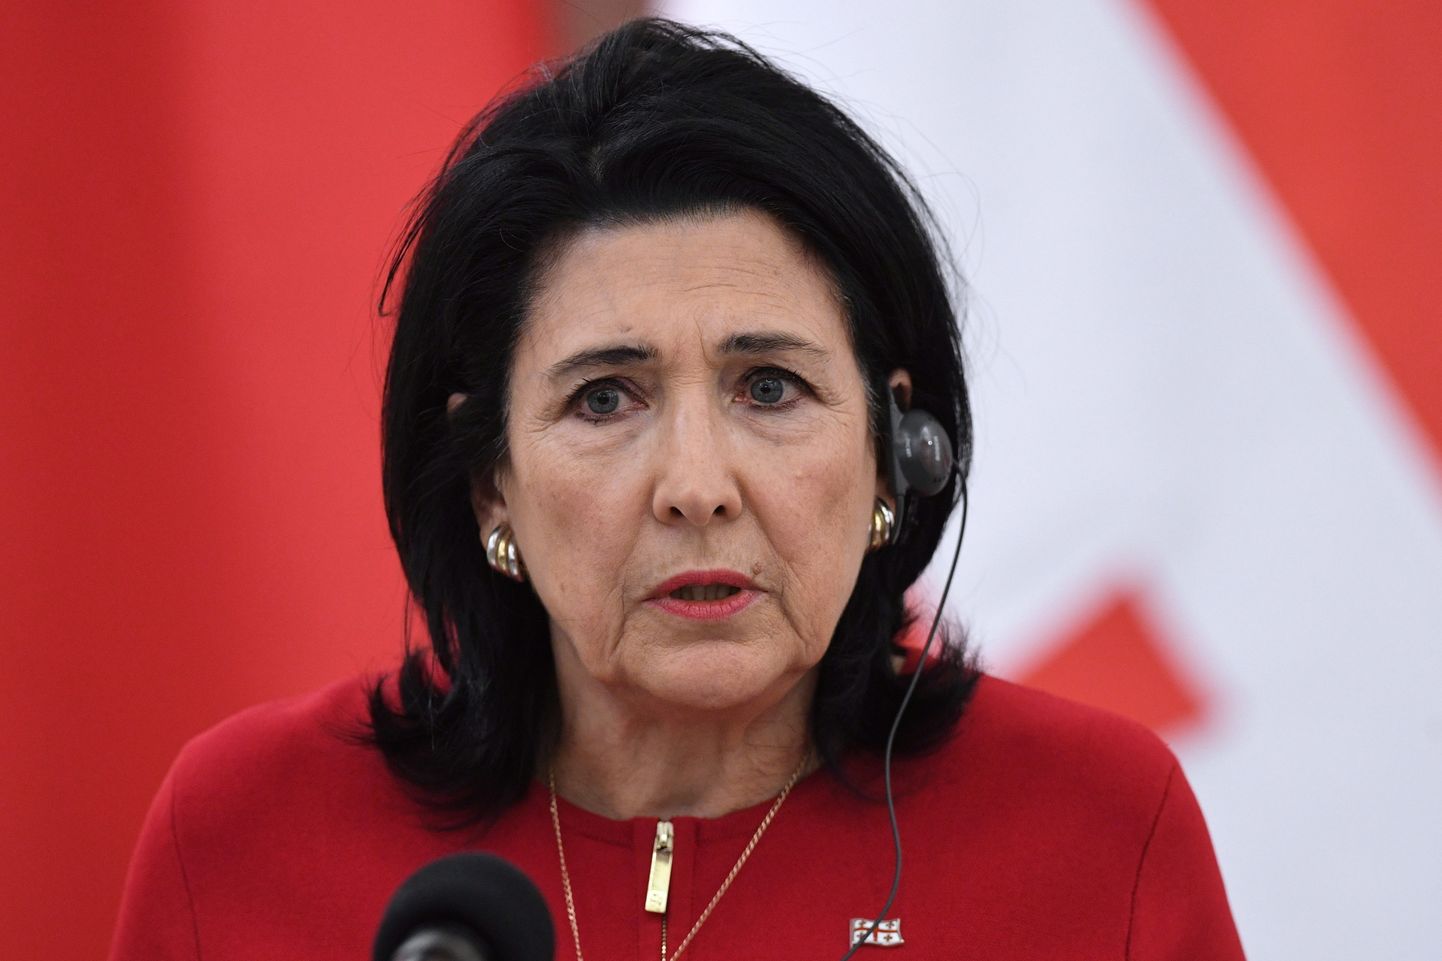  Gruzijas prezidente Salome Zurabišvili